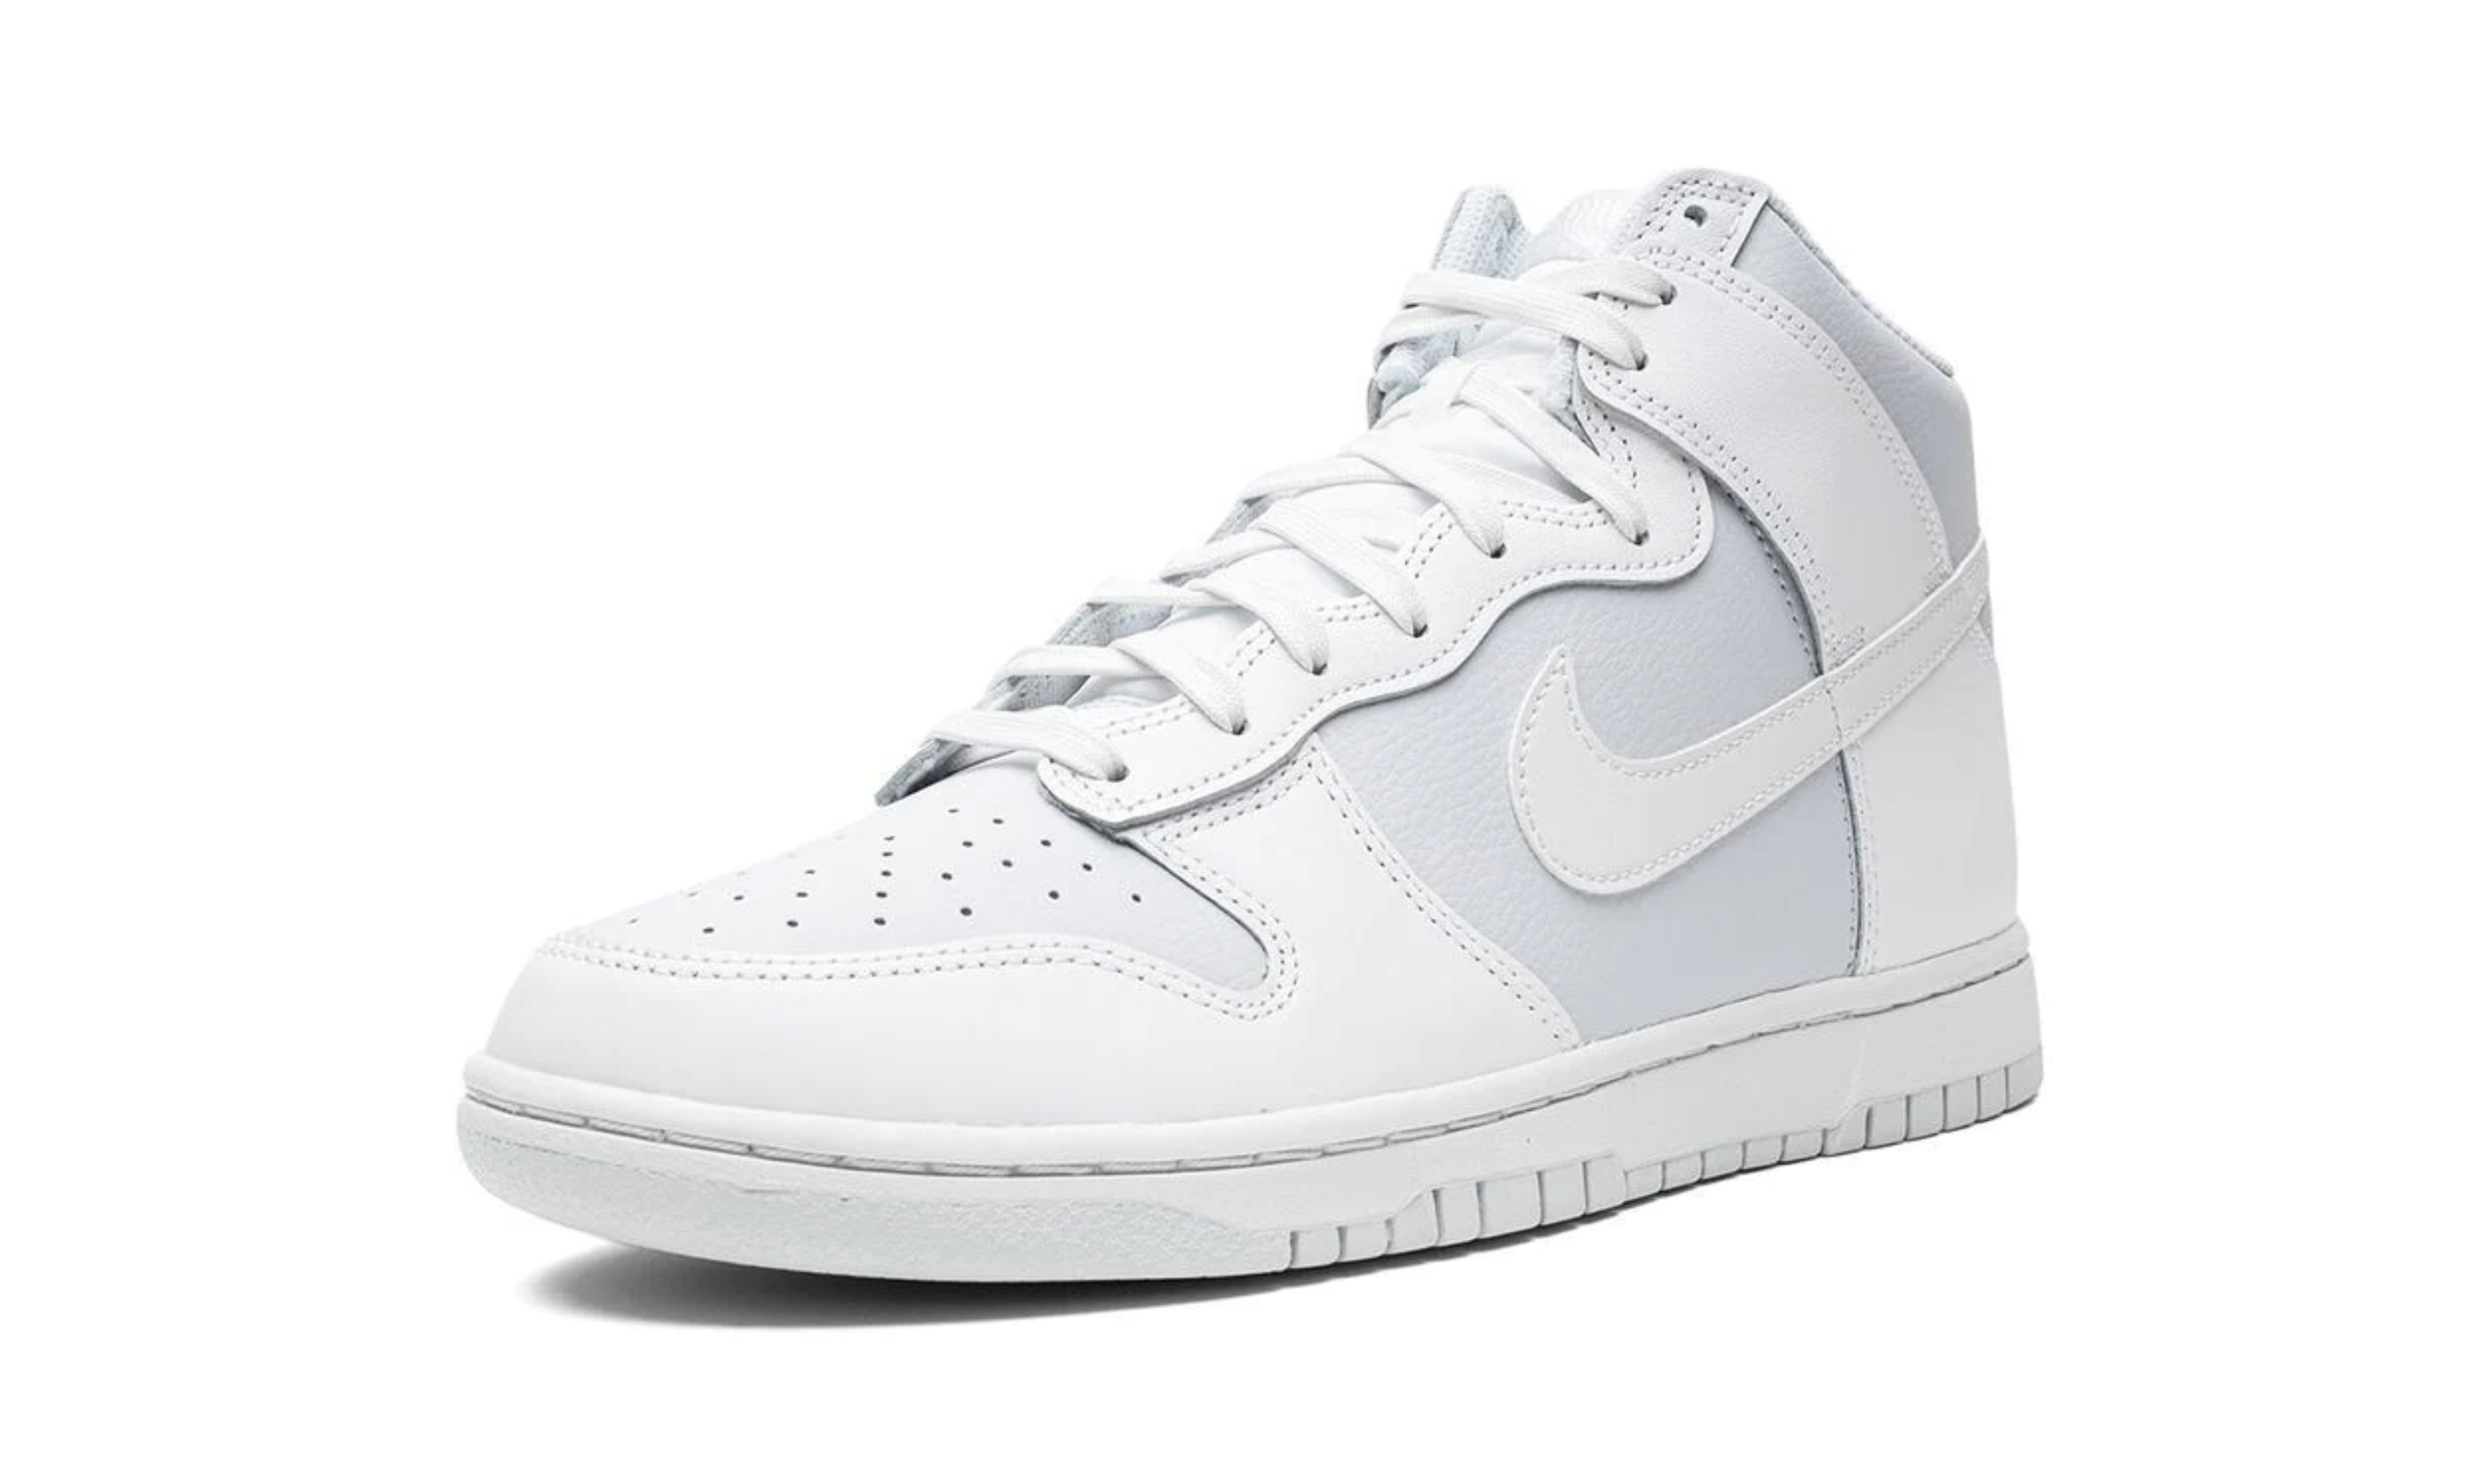 Nike Dunk High Gray White